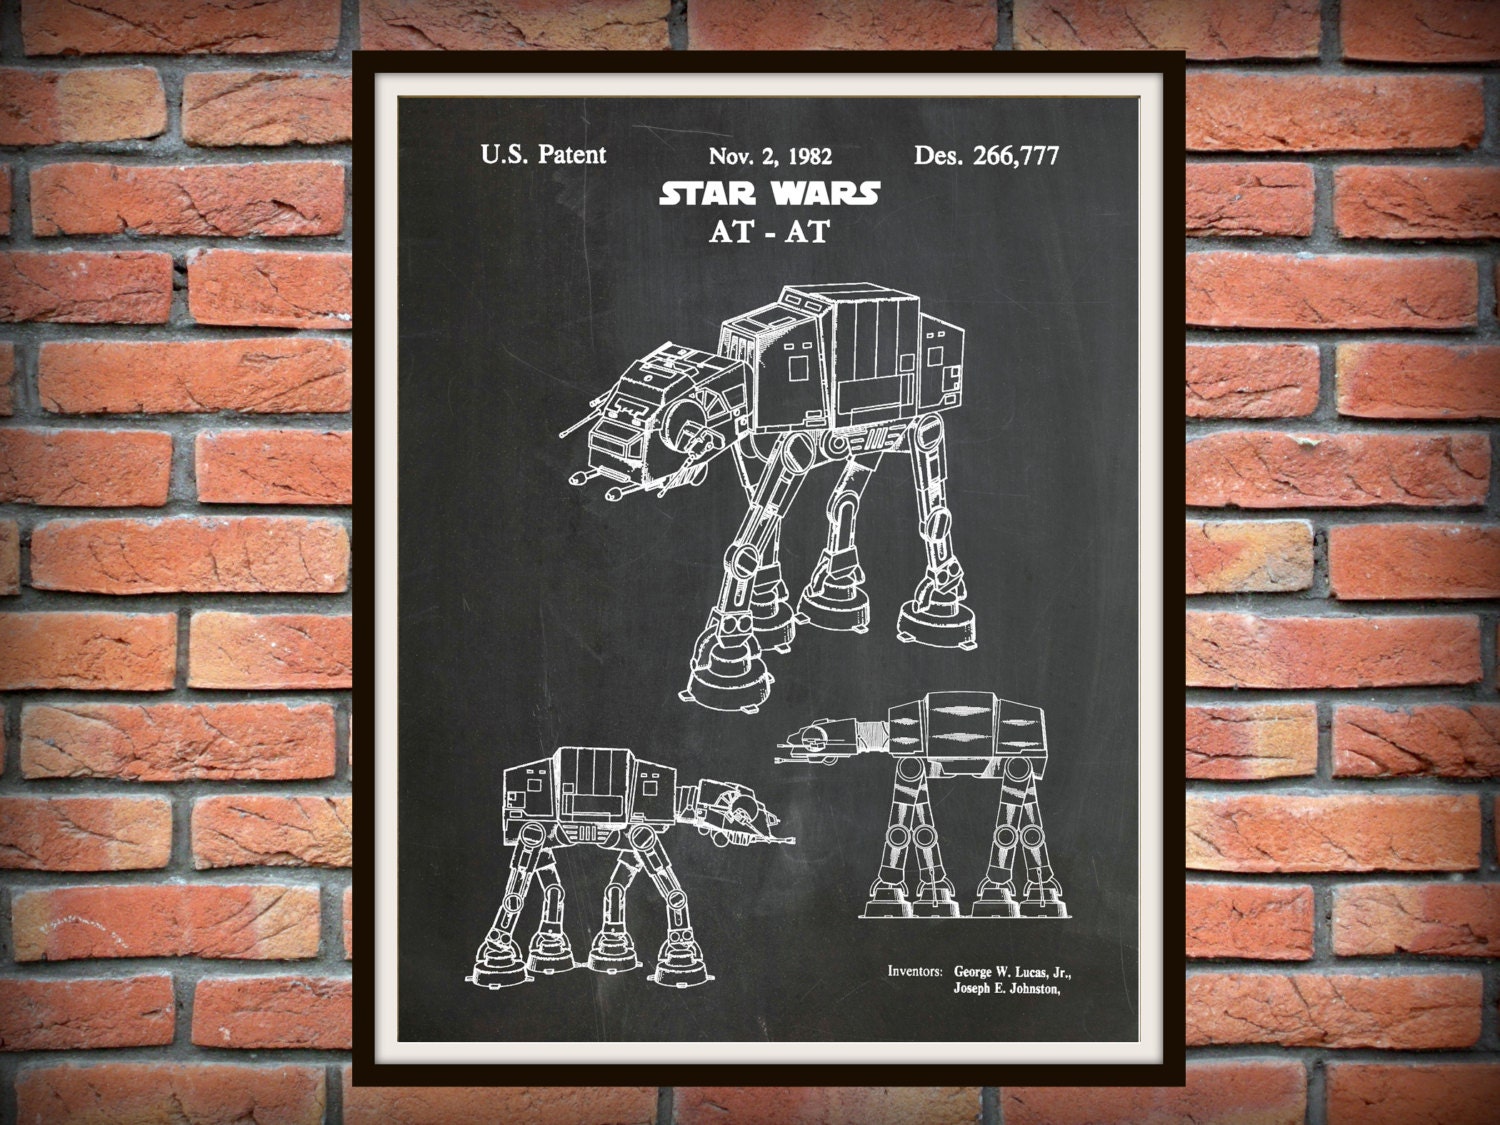 Patent 1982 Star Wars AT-AT Imperial Walker - Art Print - Poster Print - Wall Art - George Lucas - Lucas film - Battle of Jablim